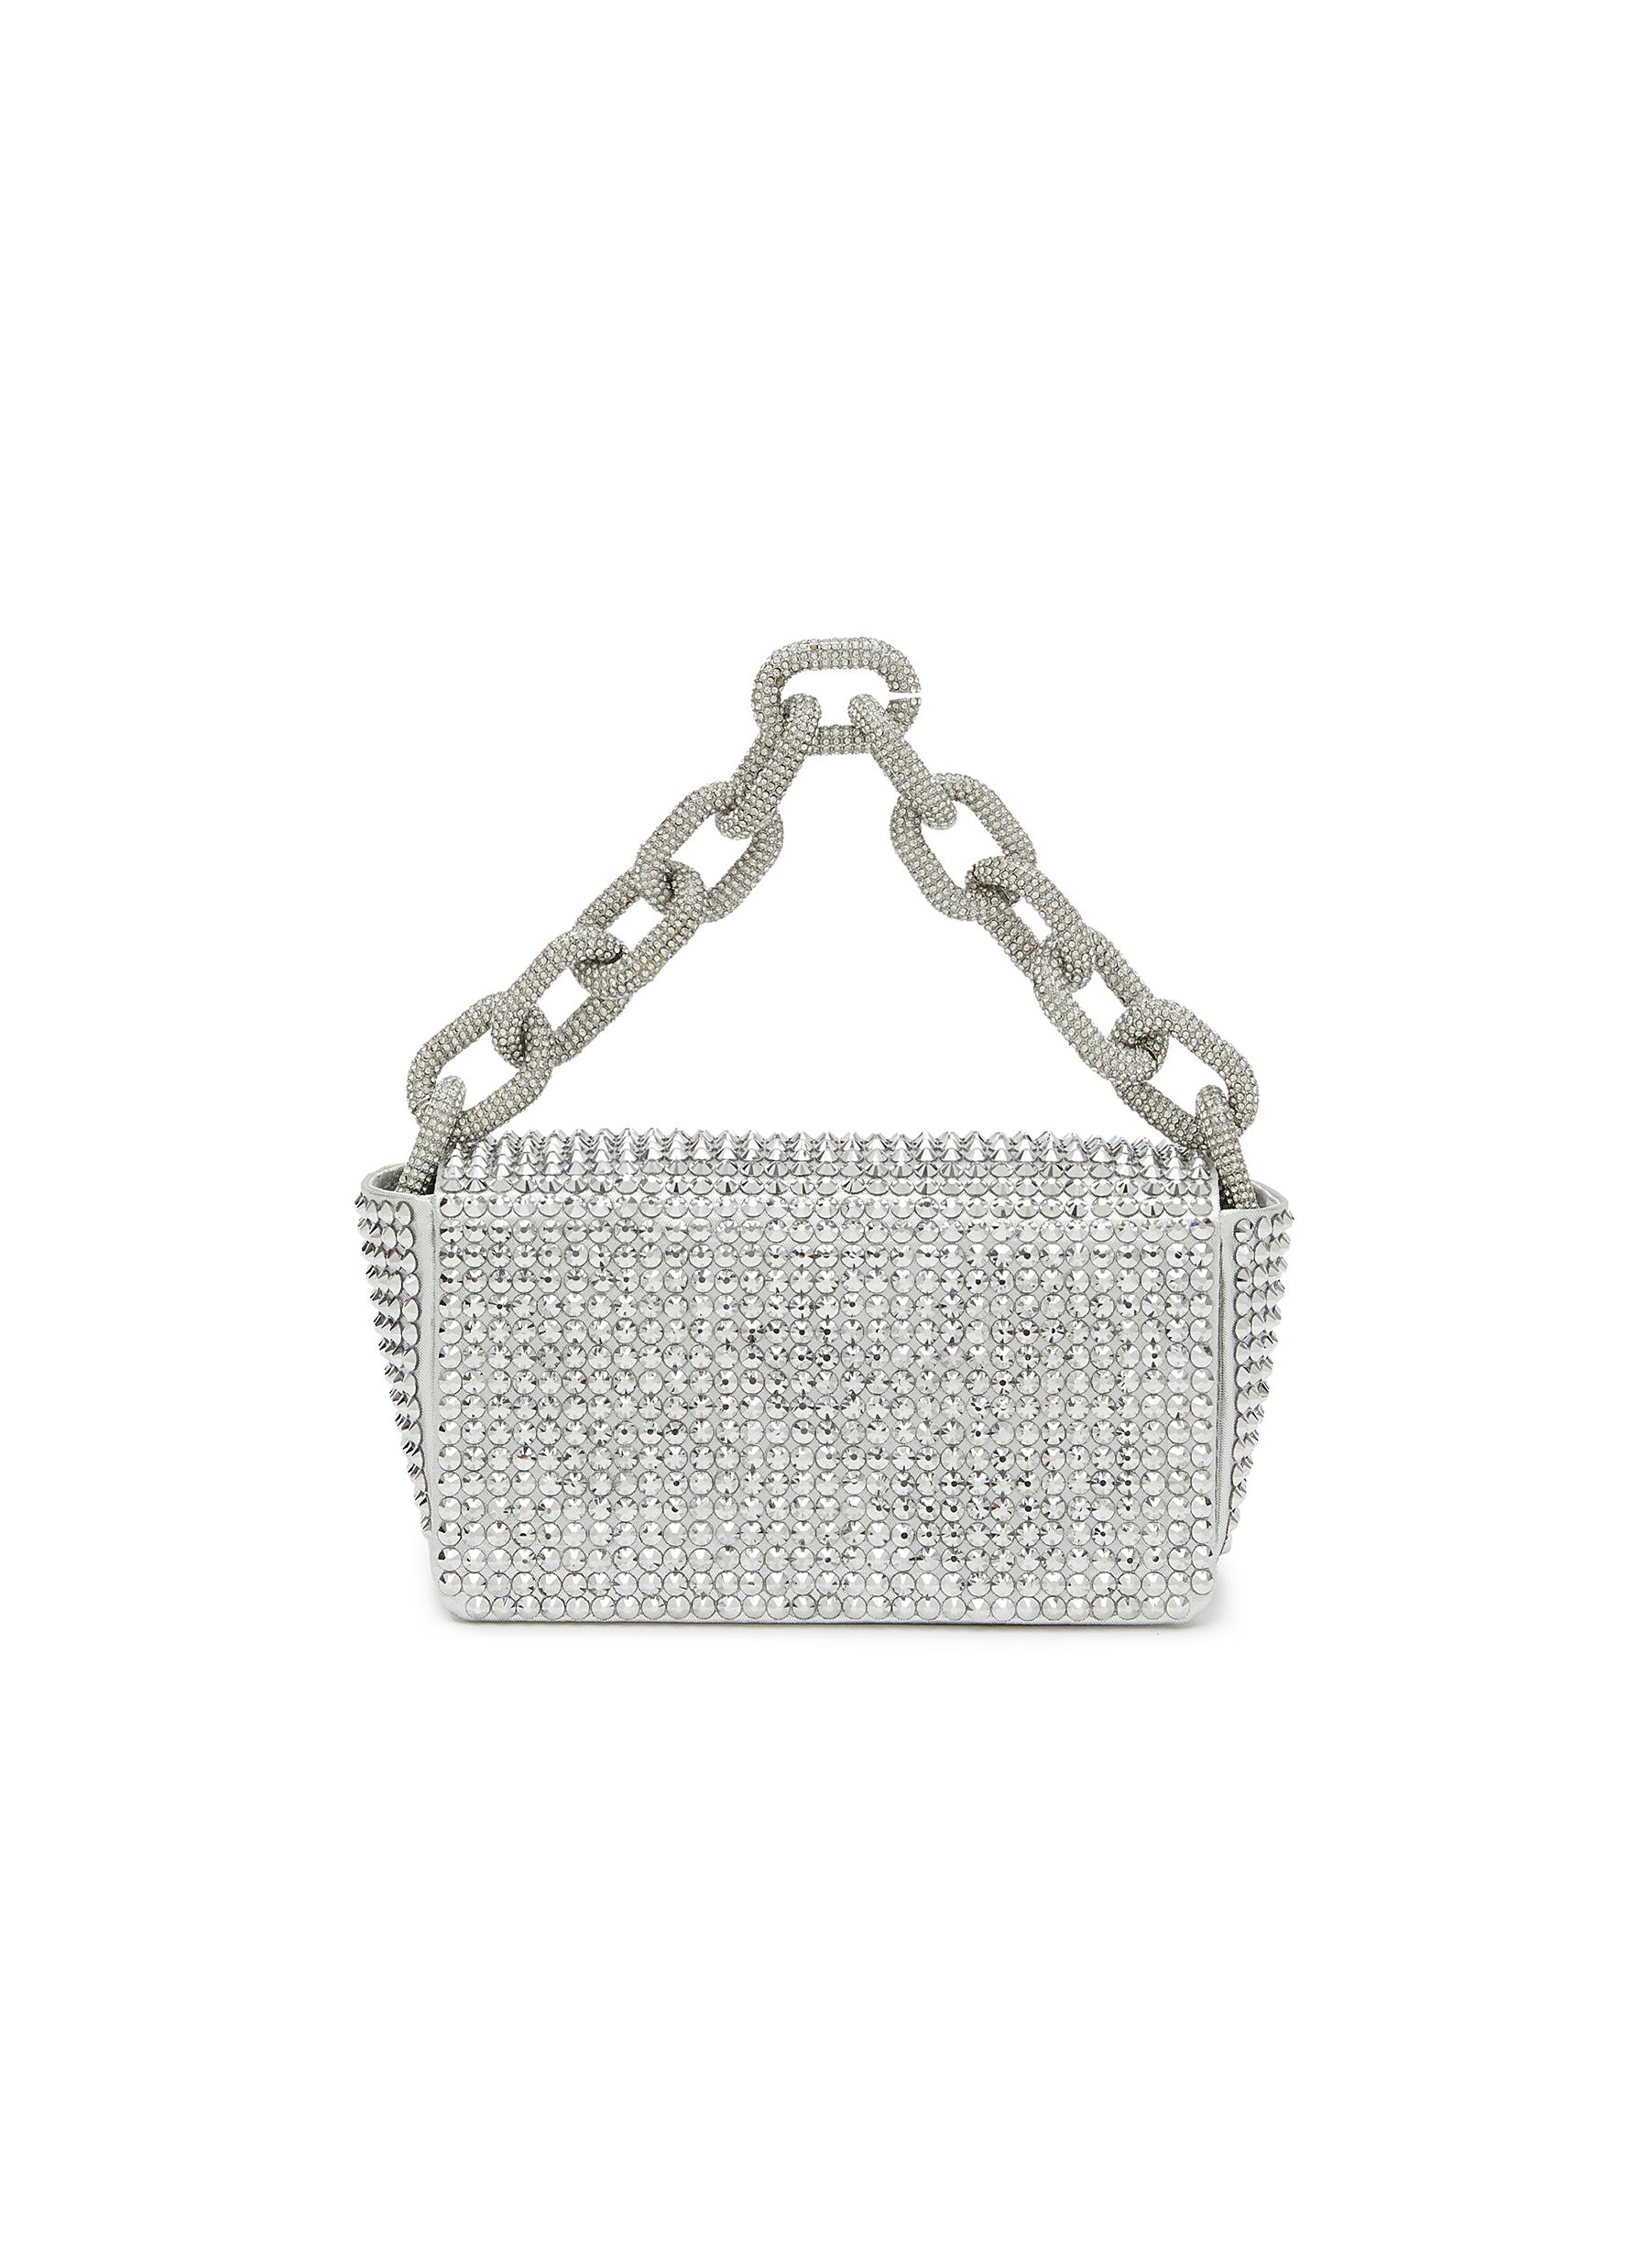 Estelle | Luxury Silver Mini Bag | Rhinestone Embellished Handle